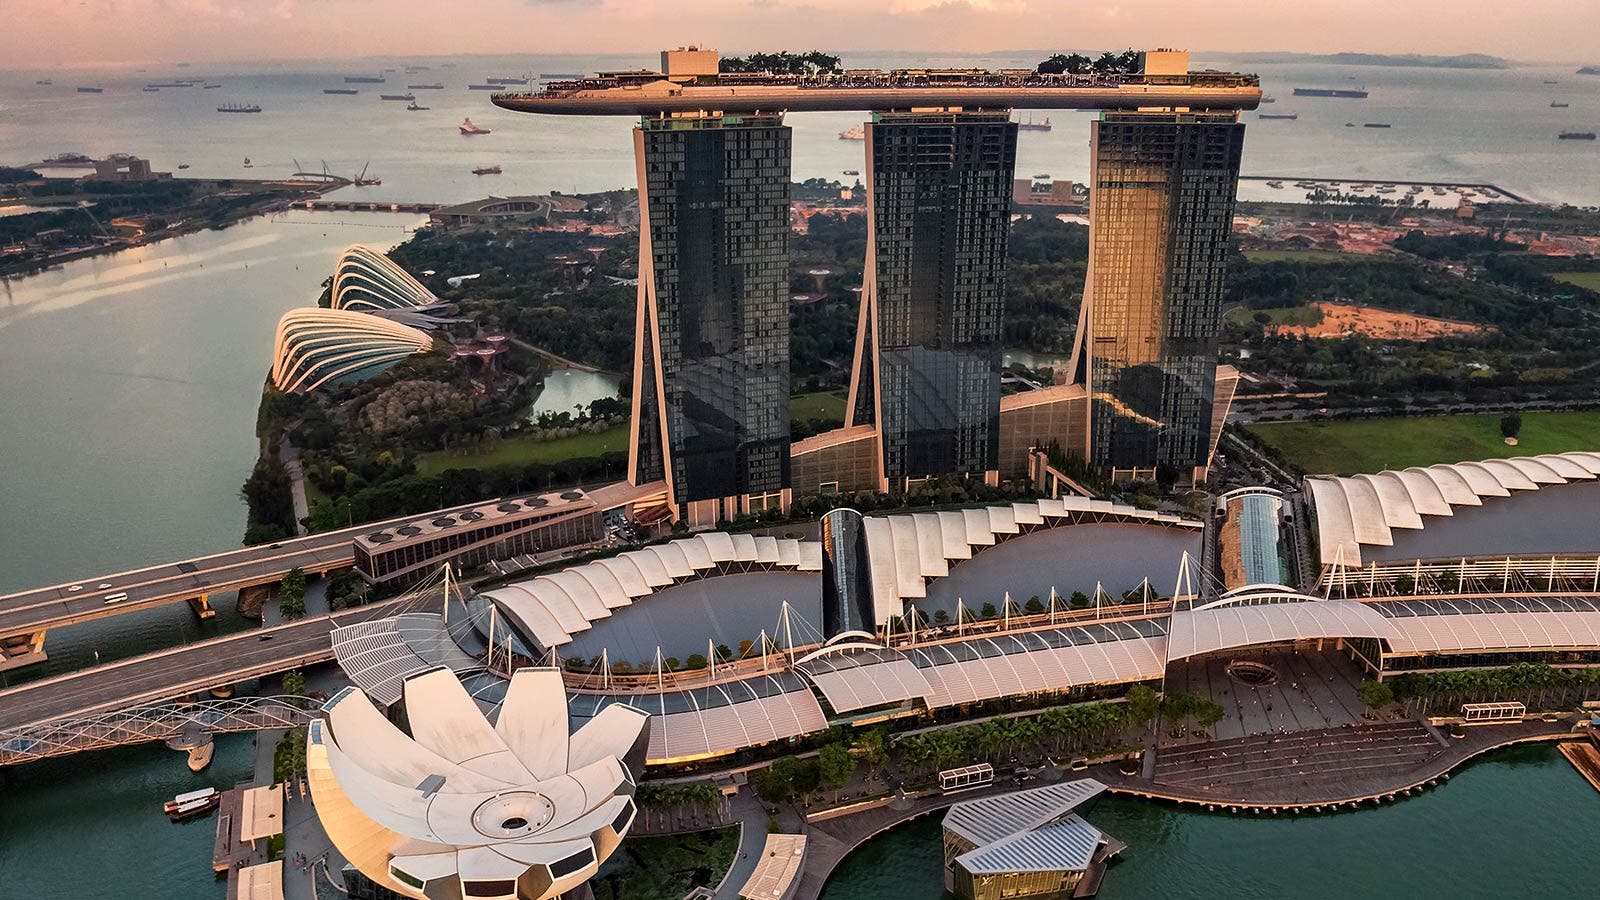 Birds-eye shot of Singapore